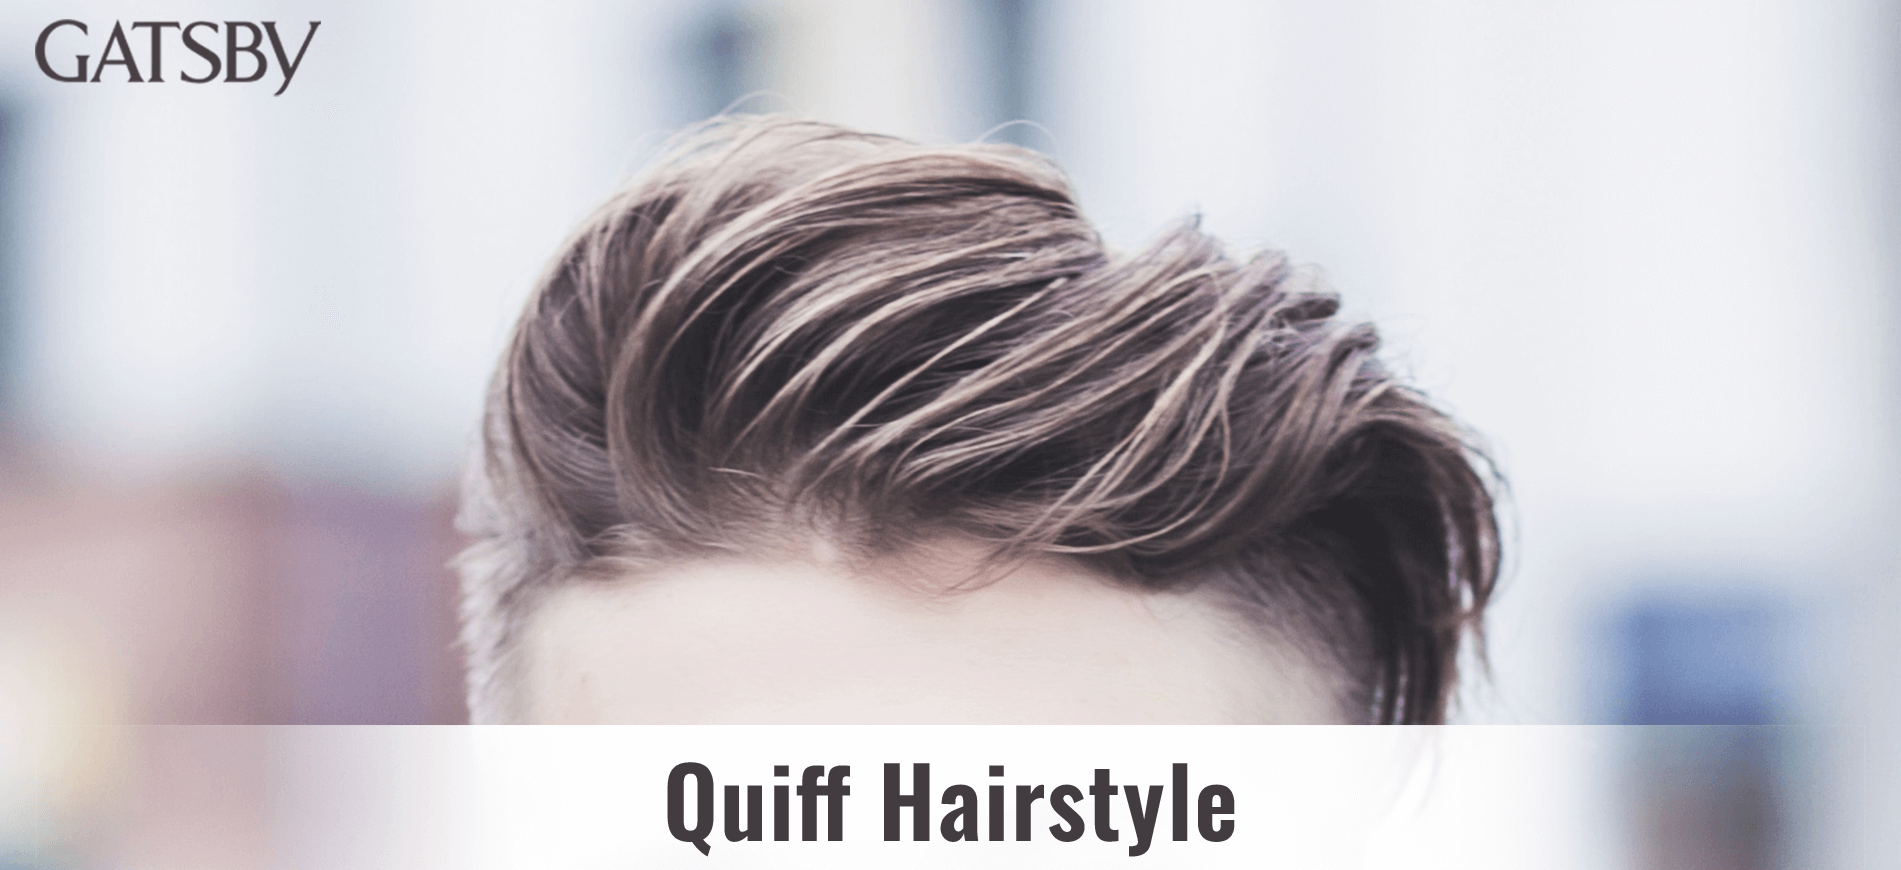 50 Statement Medium-Length Hairstyles for Men